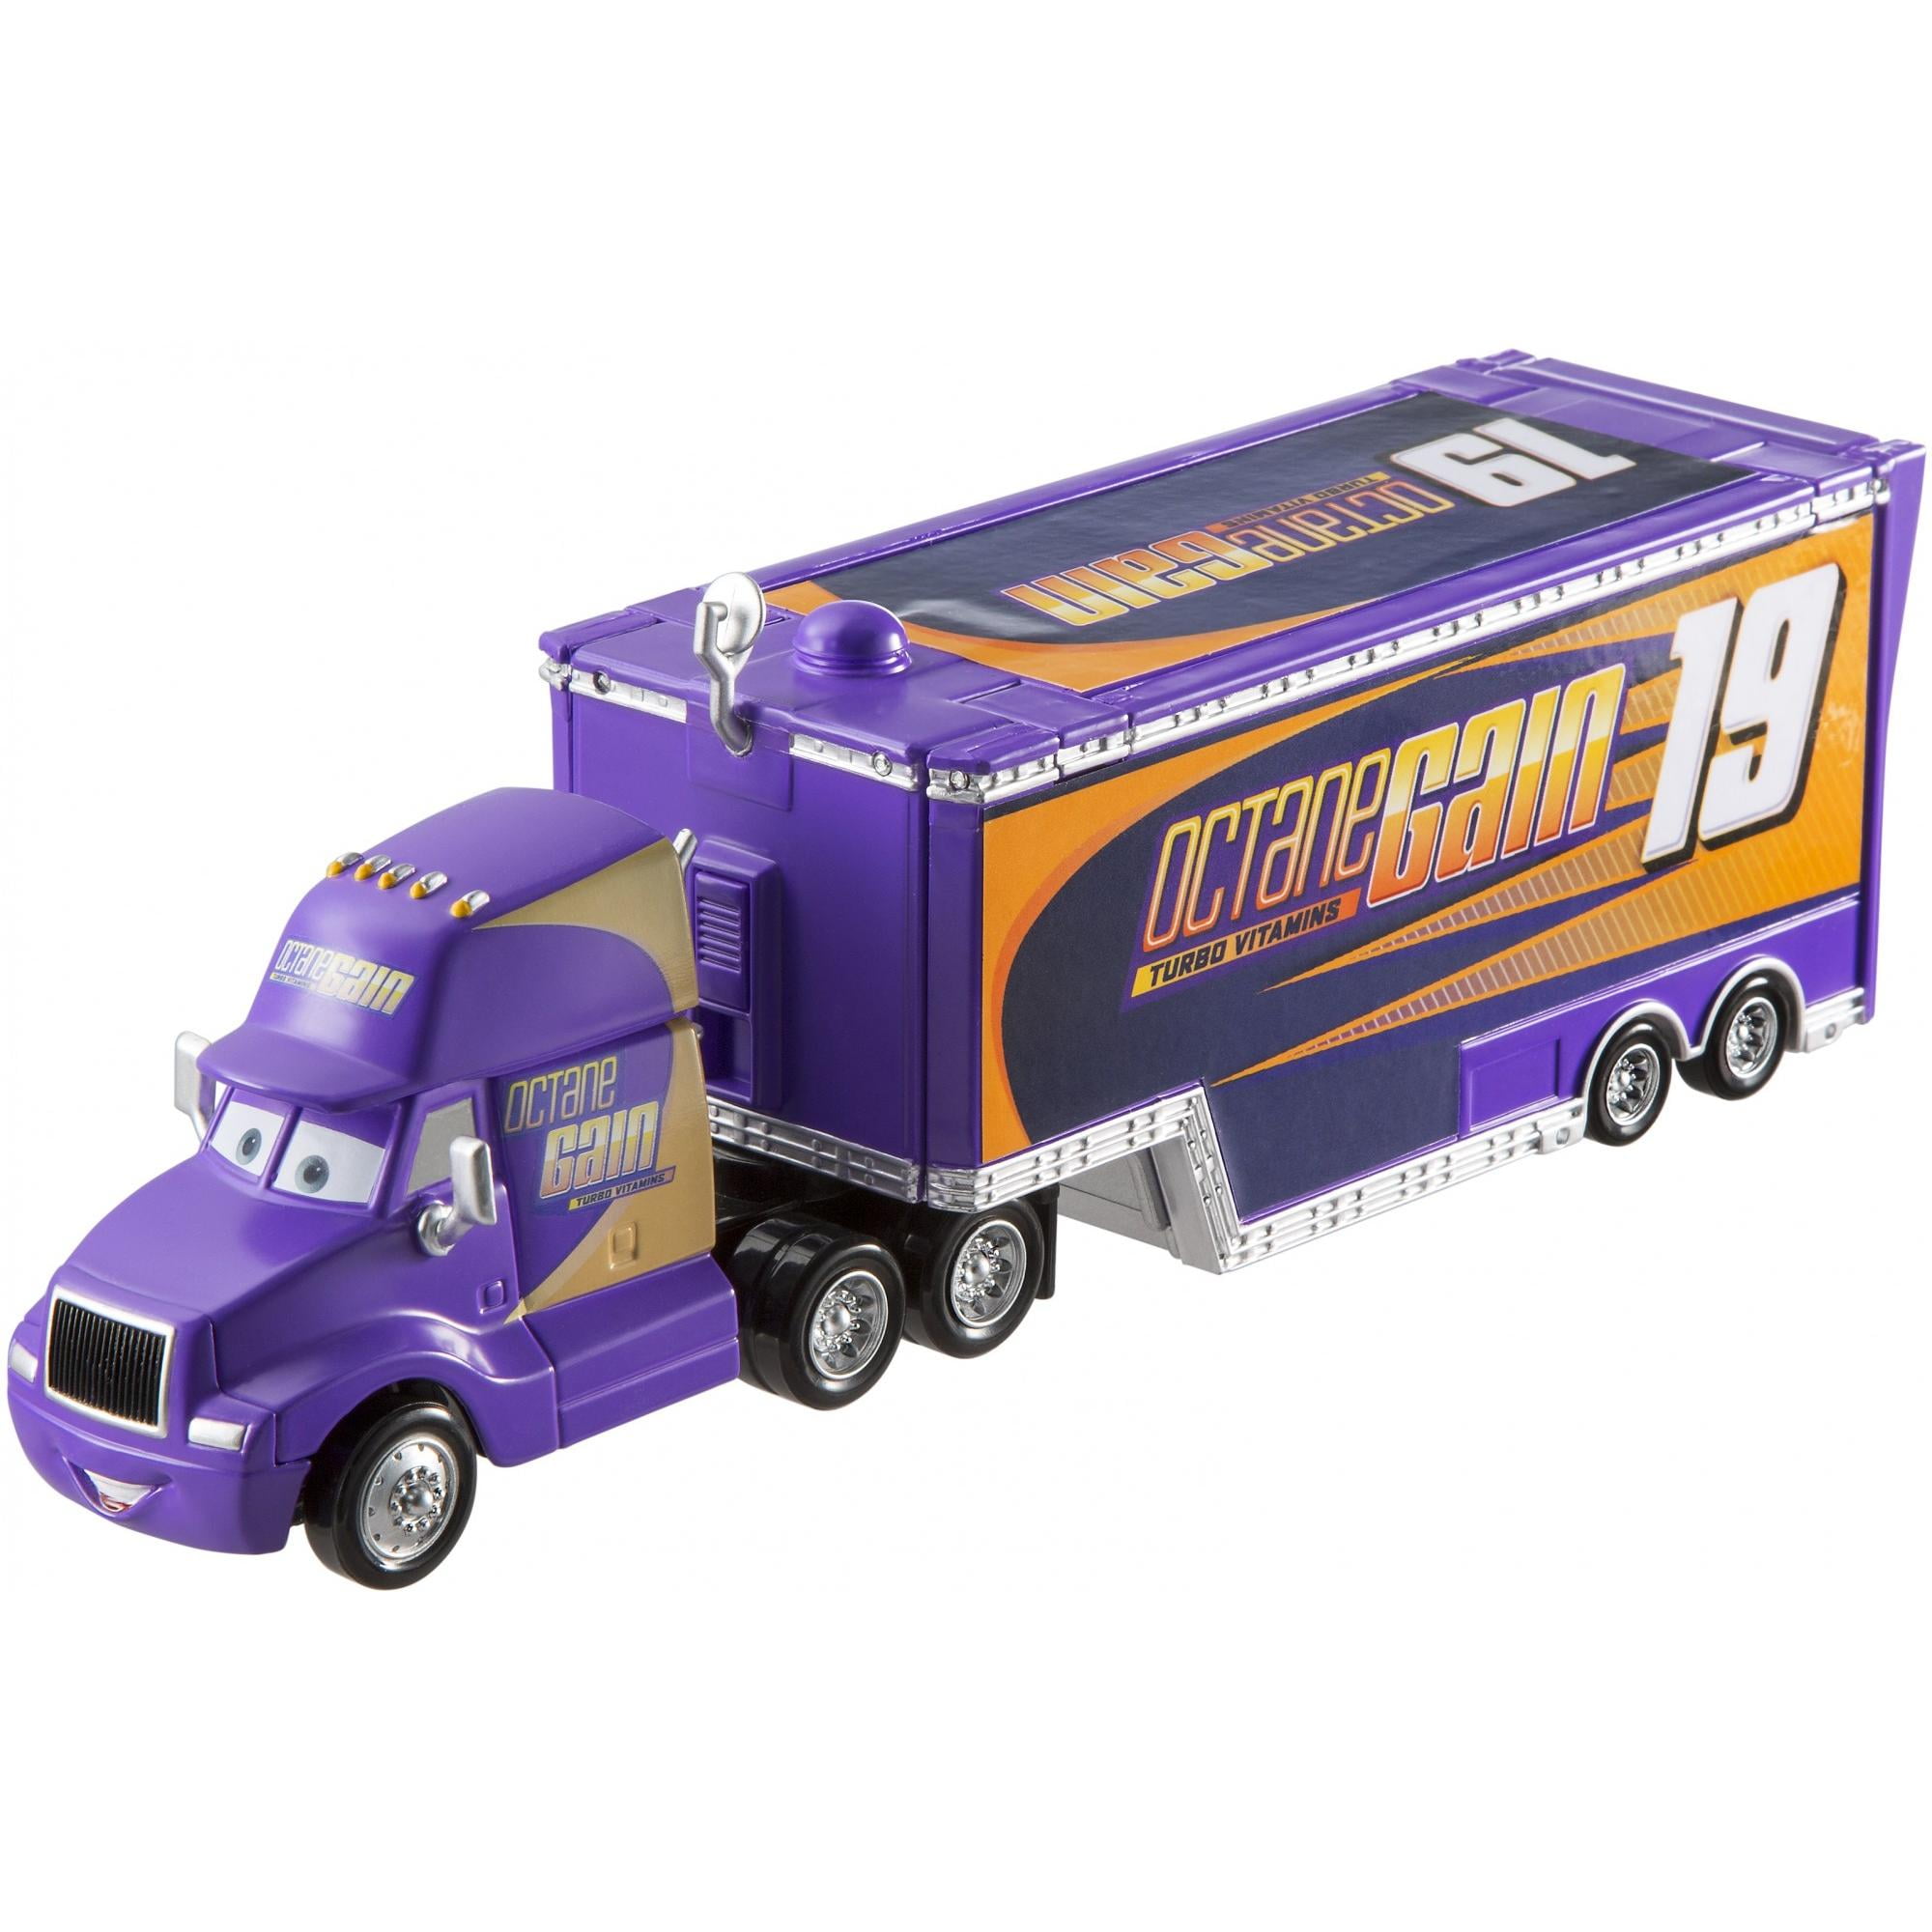 Купить игрушку грузовичок. Mack Hauler cars 3 Toy 67 Бобби. Cars Mattel грузовик. Тачки игрушки грузовик Walmart. Игрушки Тачки 1 грузовик Мак Хаулер.